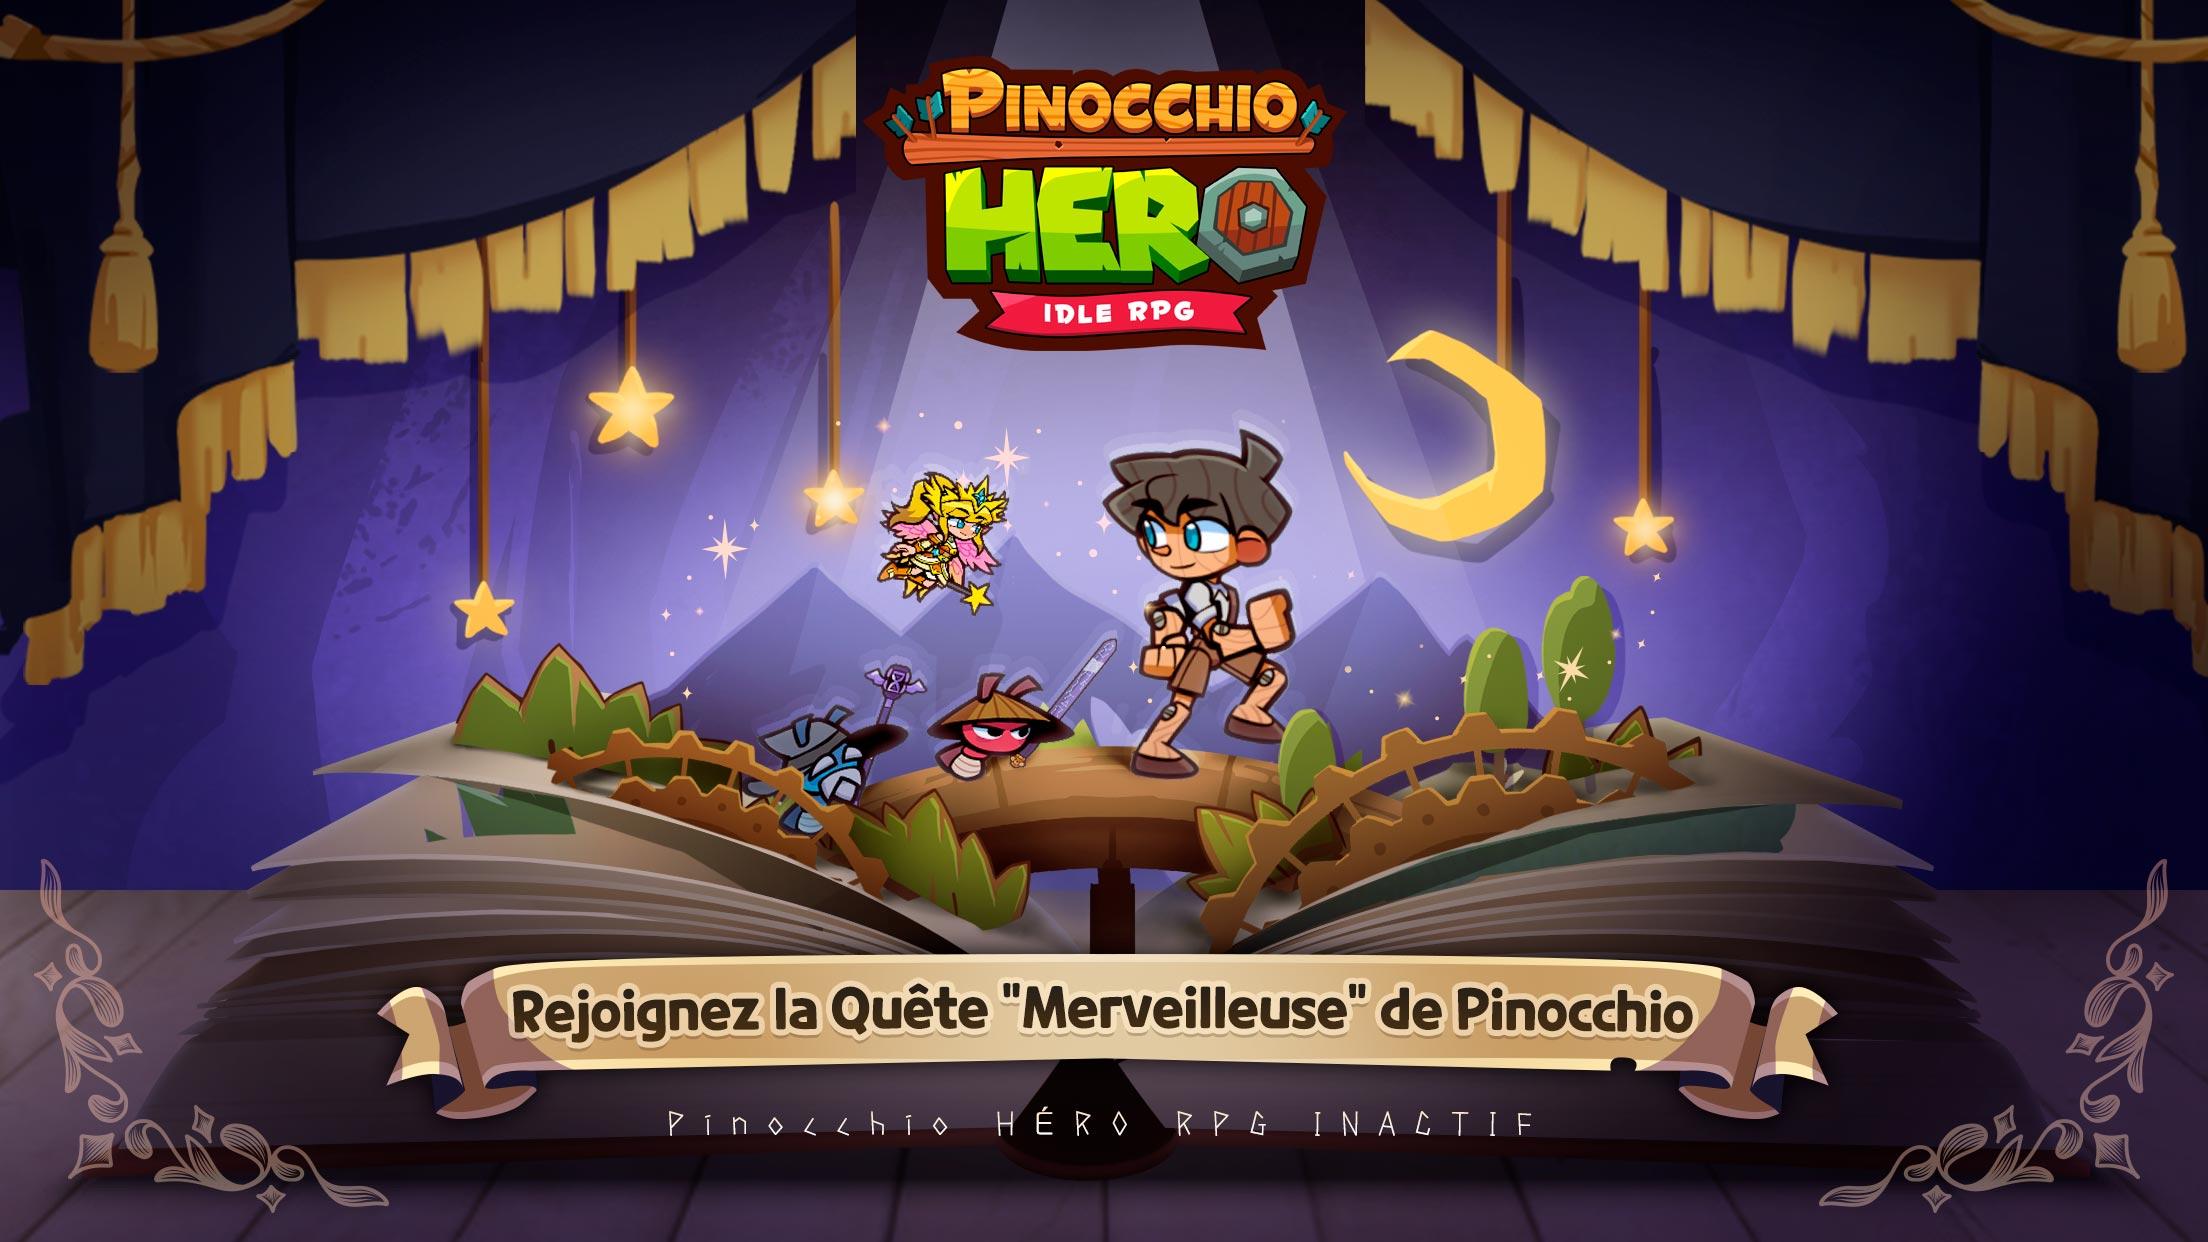 Screenshot 1 of Pinocchio HÉRO RPG INACTIF 1.0.10